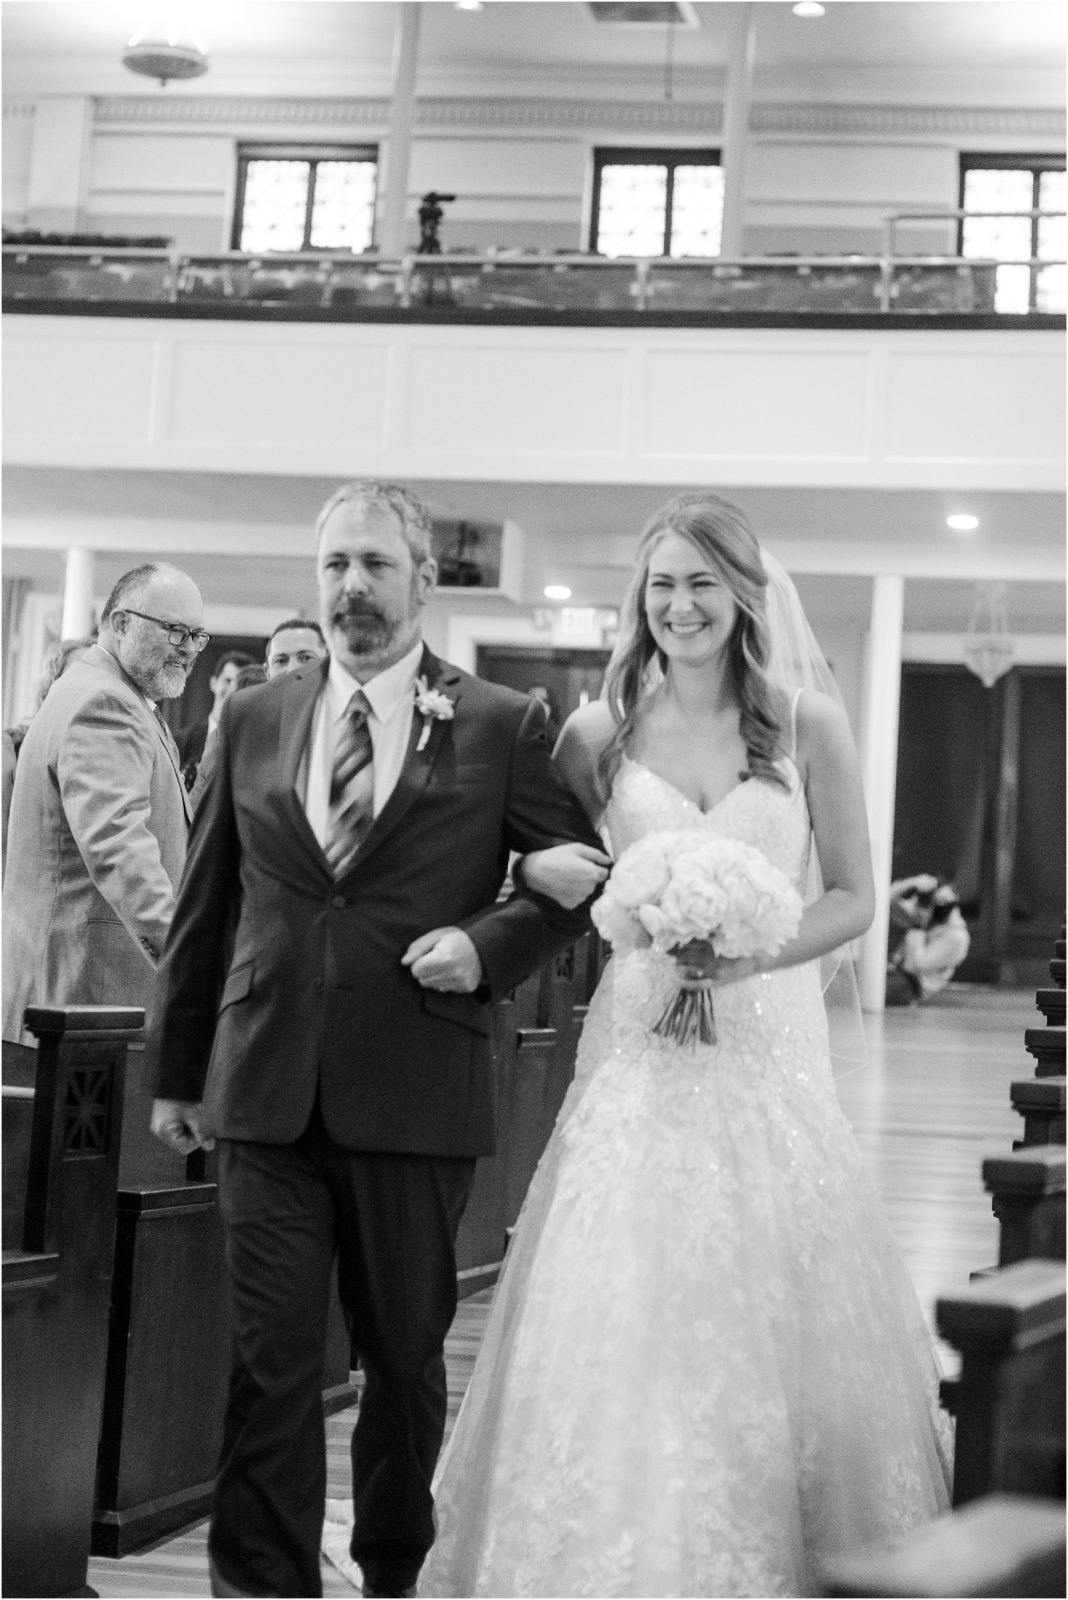 Bride walks with dad down church aisle